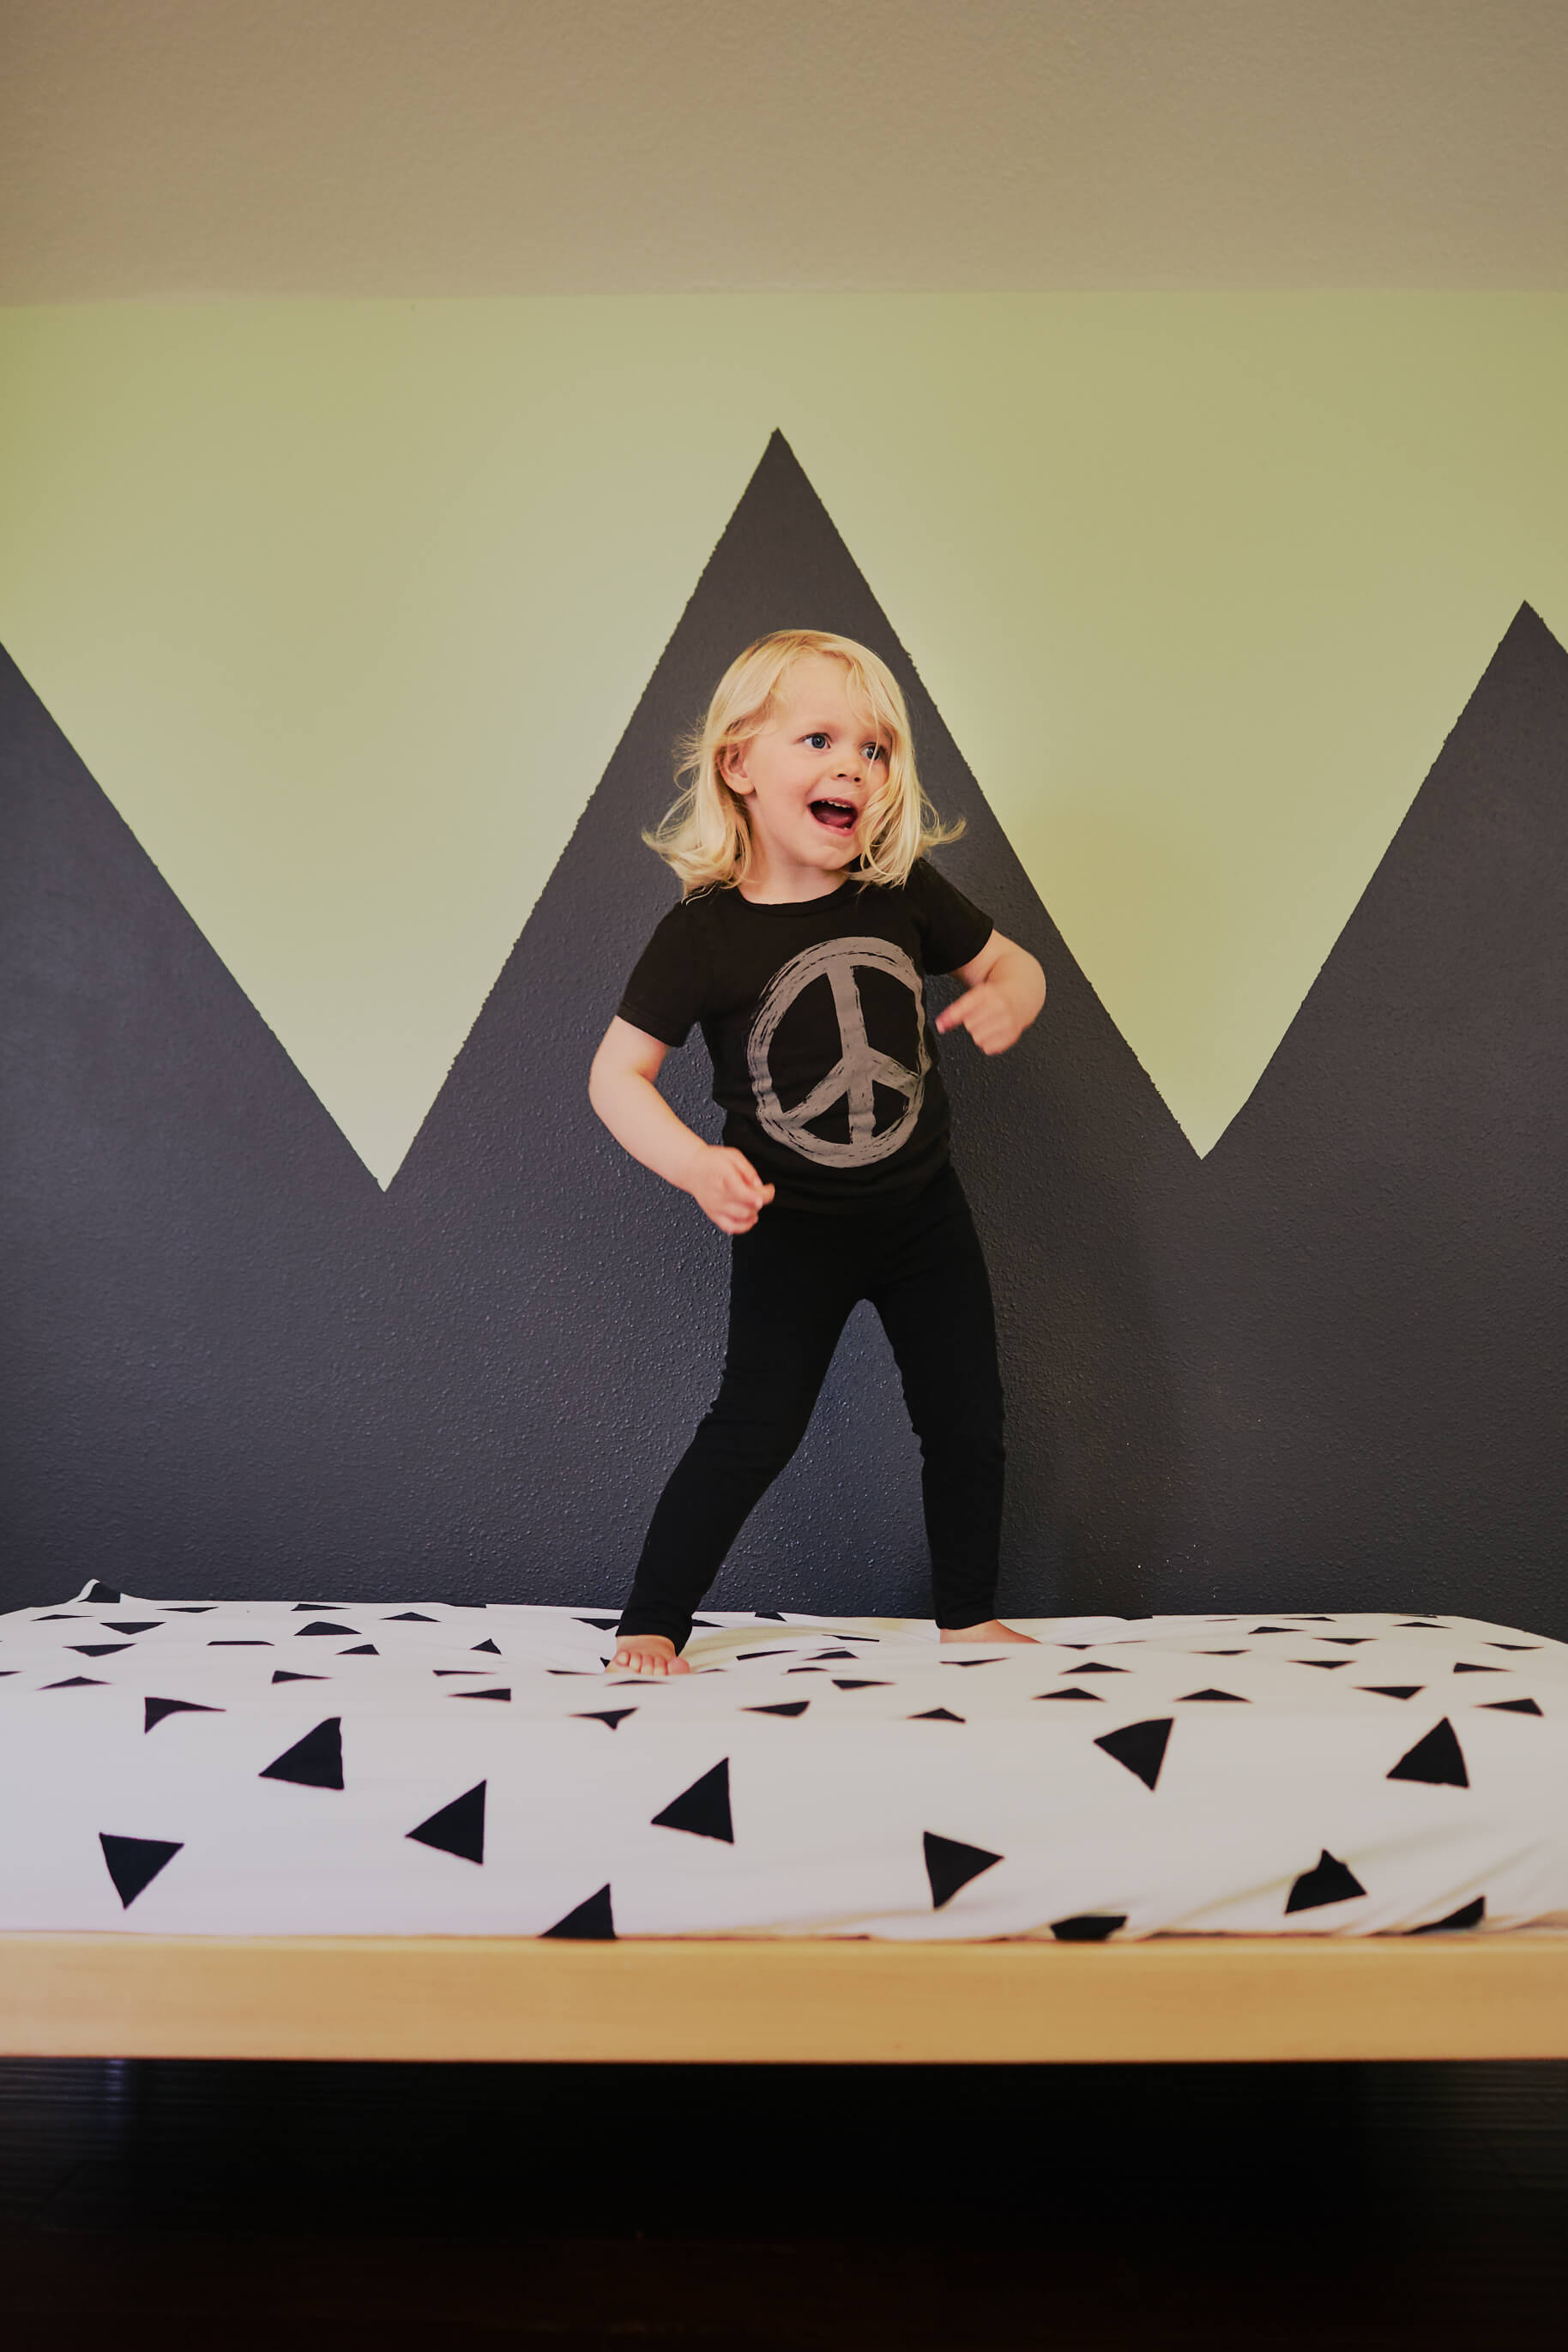 Kindred Kid & Baby Organic Cotton Triangle Crib Sheet
Jungle Pillows